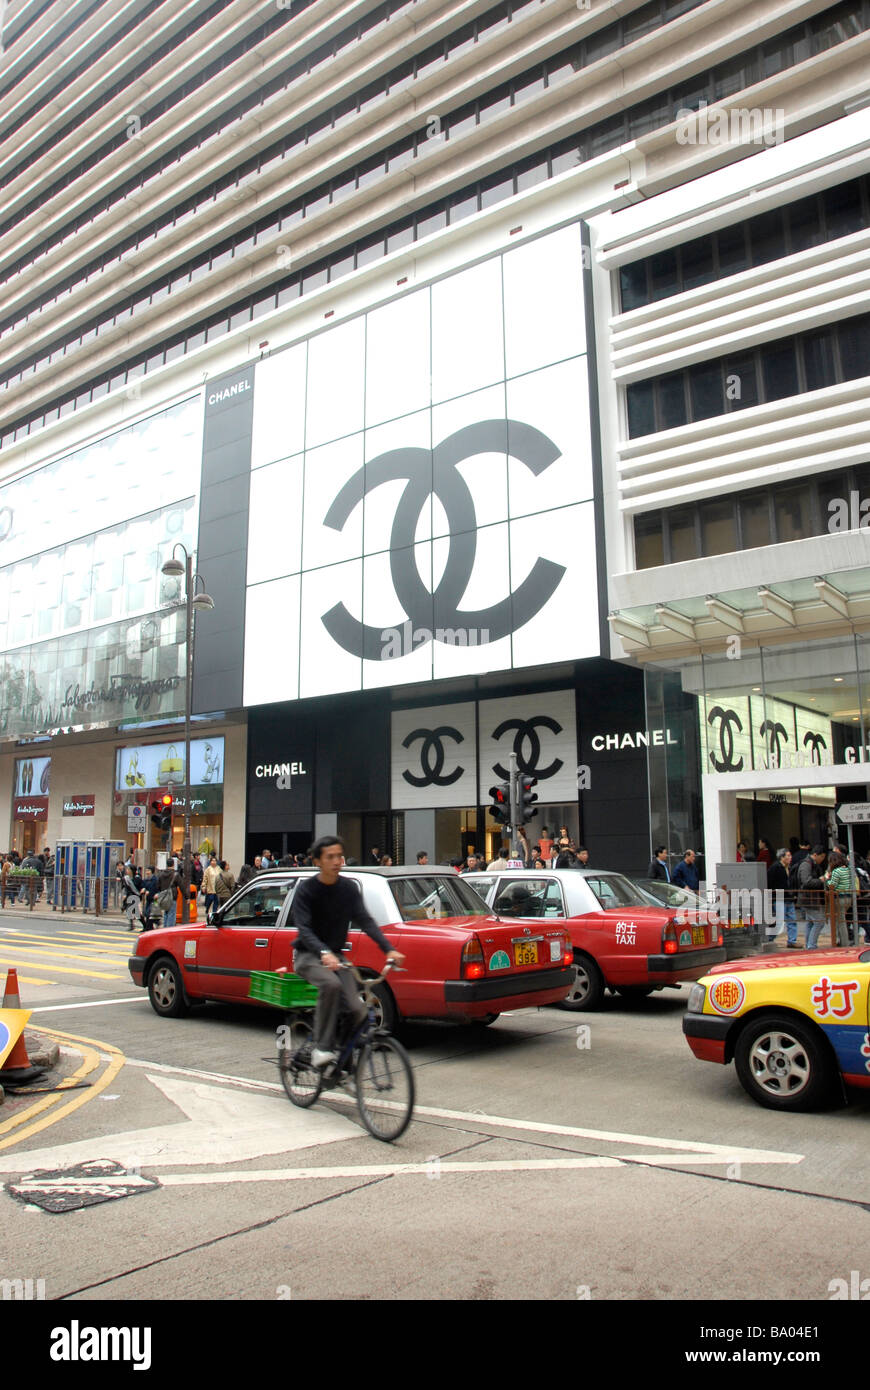 Street scene, Chanel store, Kowloon, Hong Kong, China Stock Photo